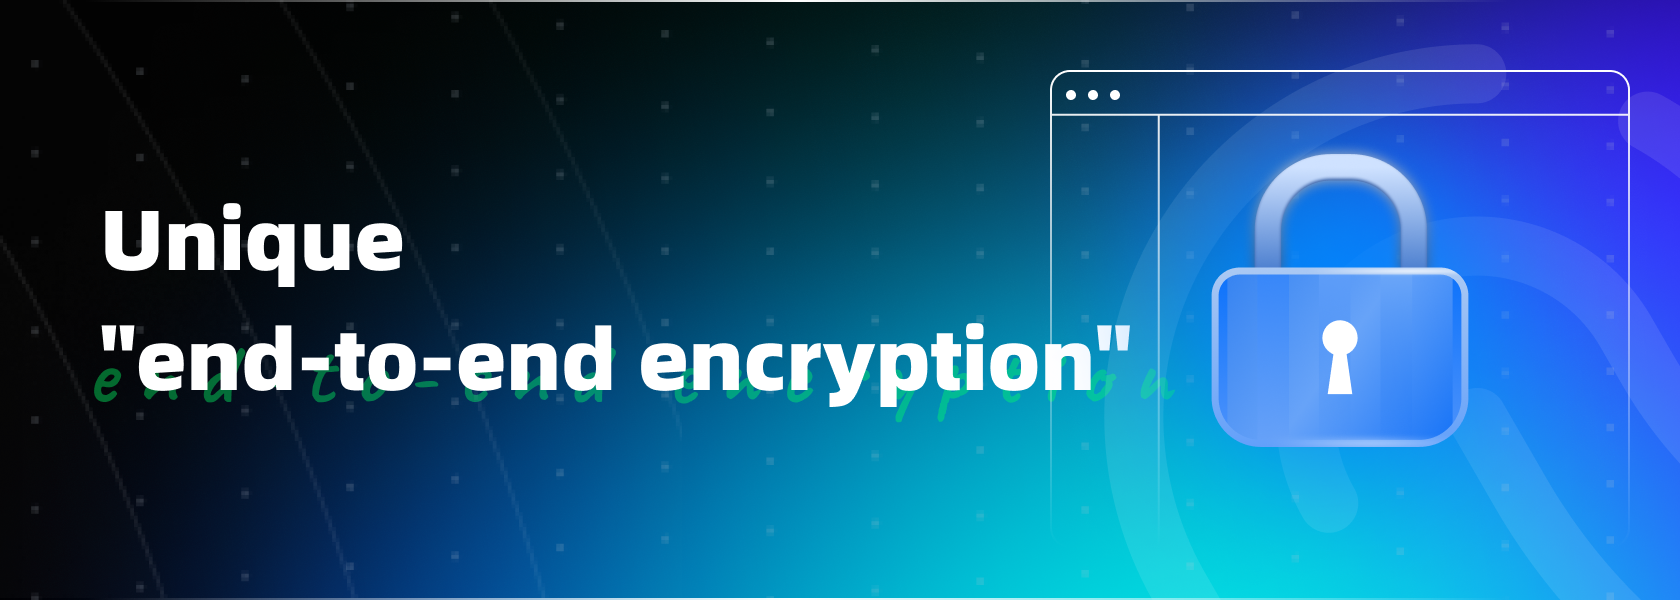 Unique end-to-end encryption